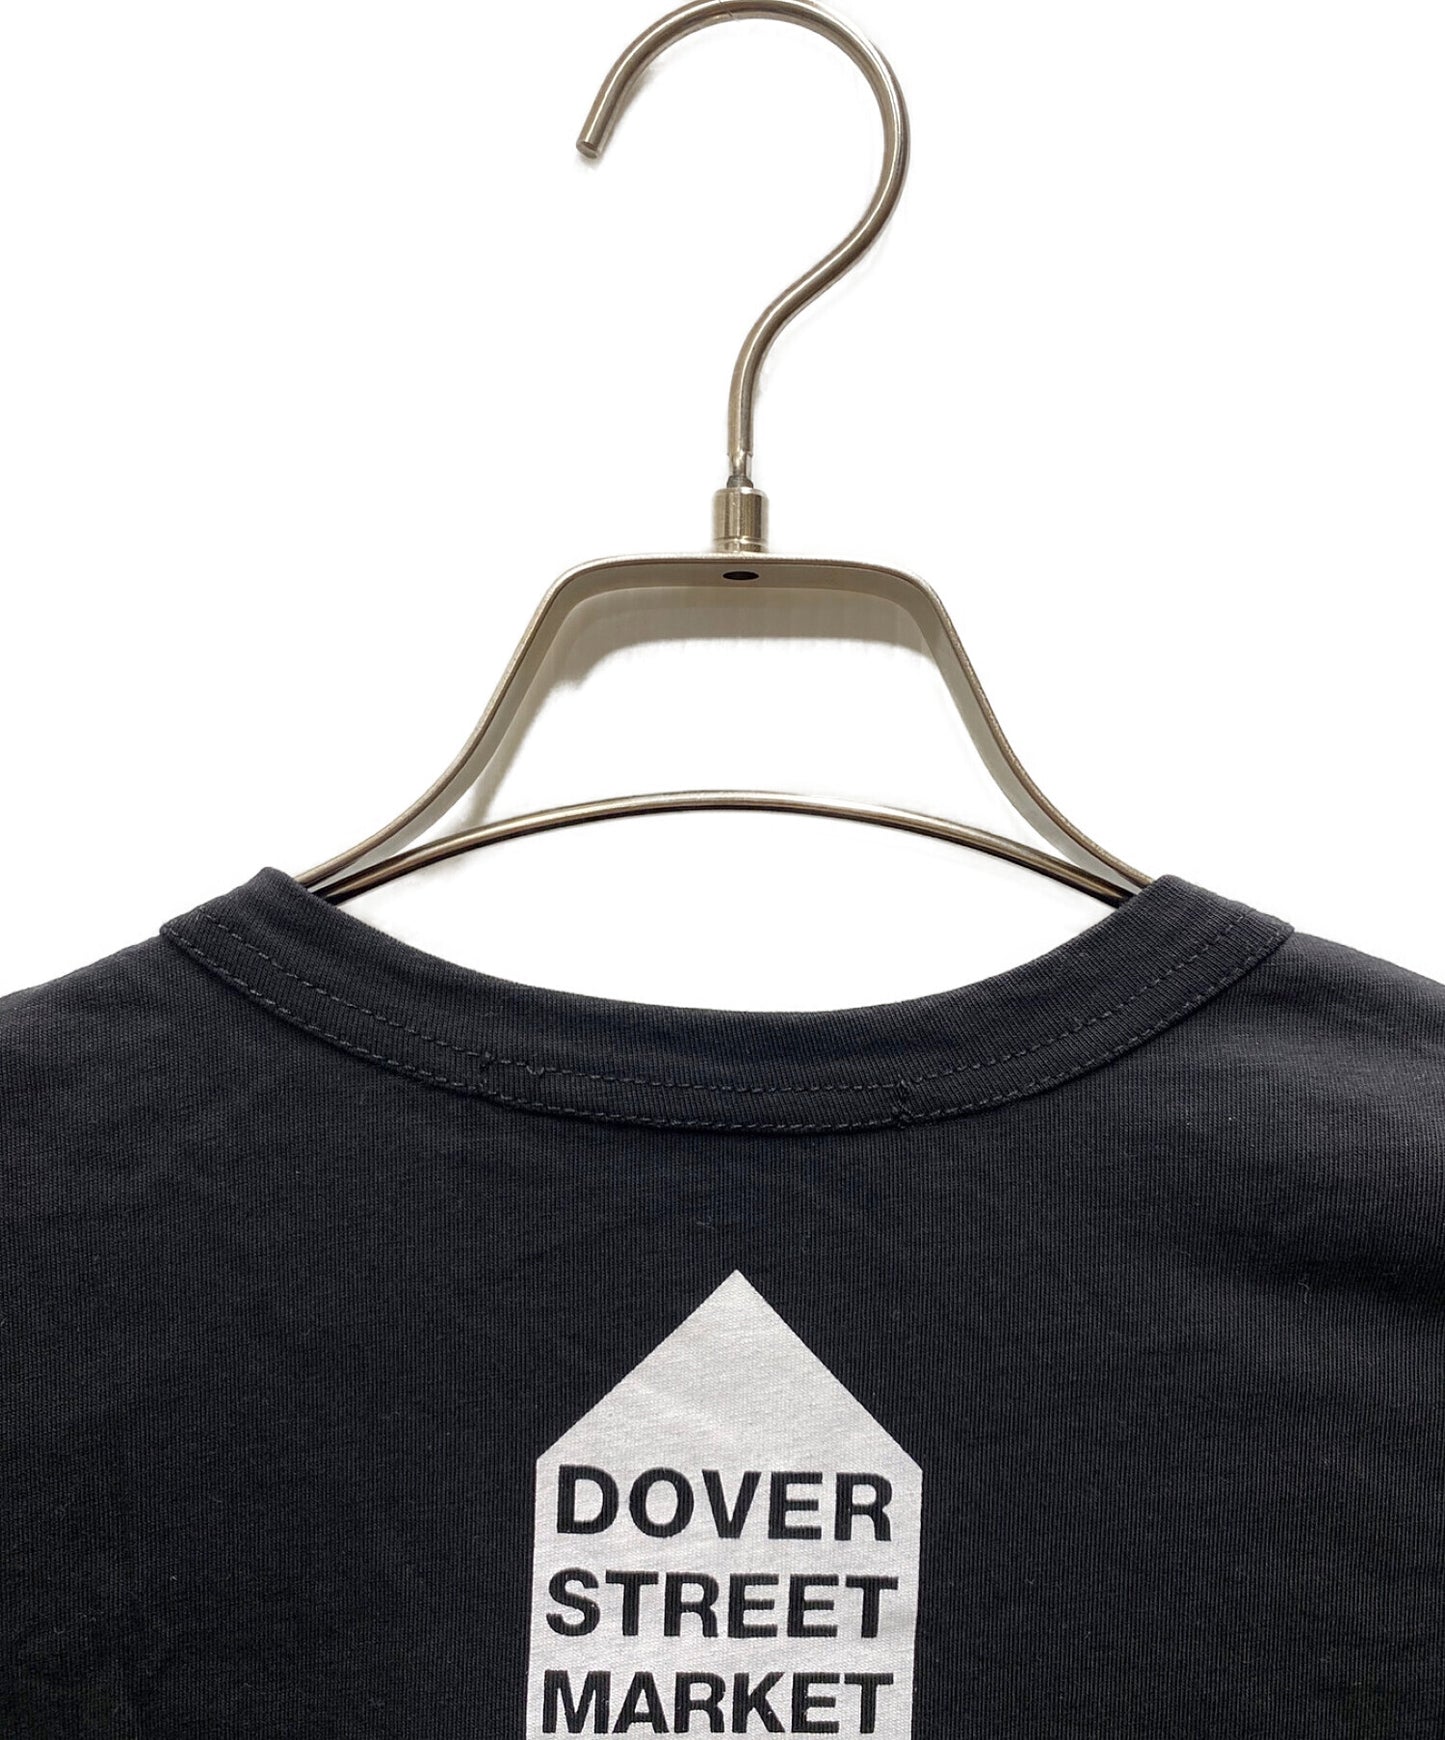 Comme des Garcons Dover Street Market Limited Collaboration T-Shirt ZI-T002-001